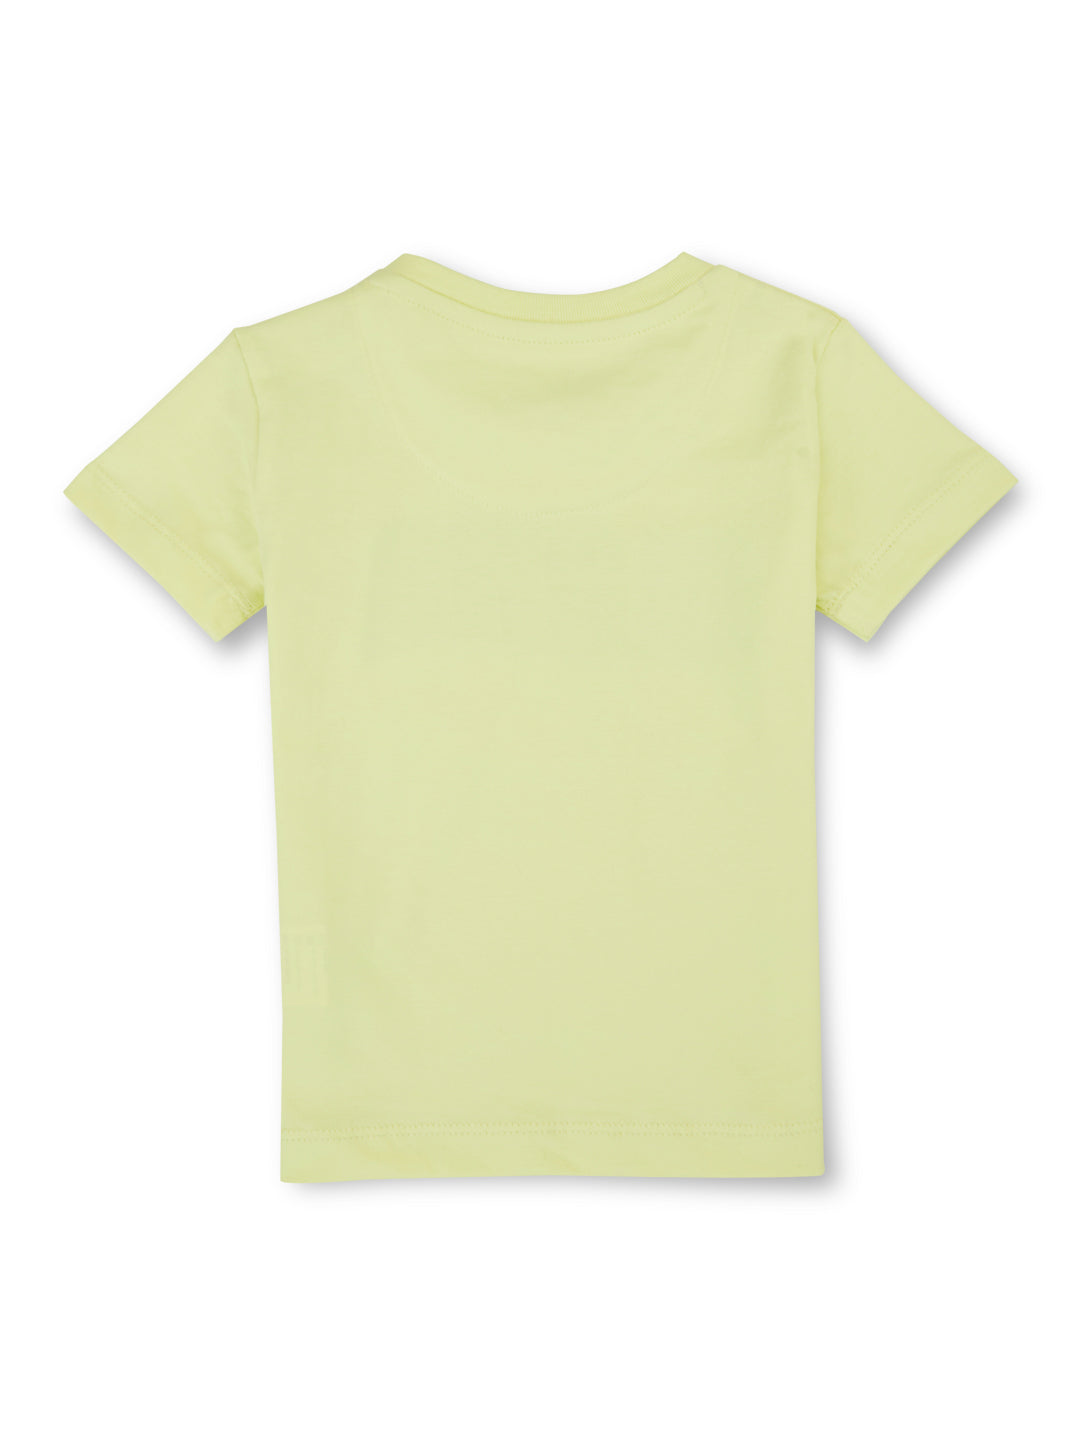 GJ Baby Boys Yellow Cotton Graphic Print Round Neck Half Sleeves T-Shirt